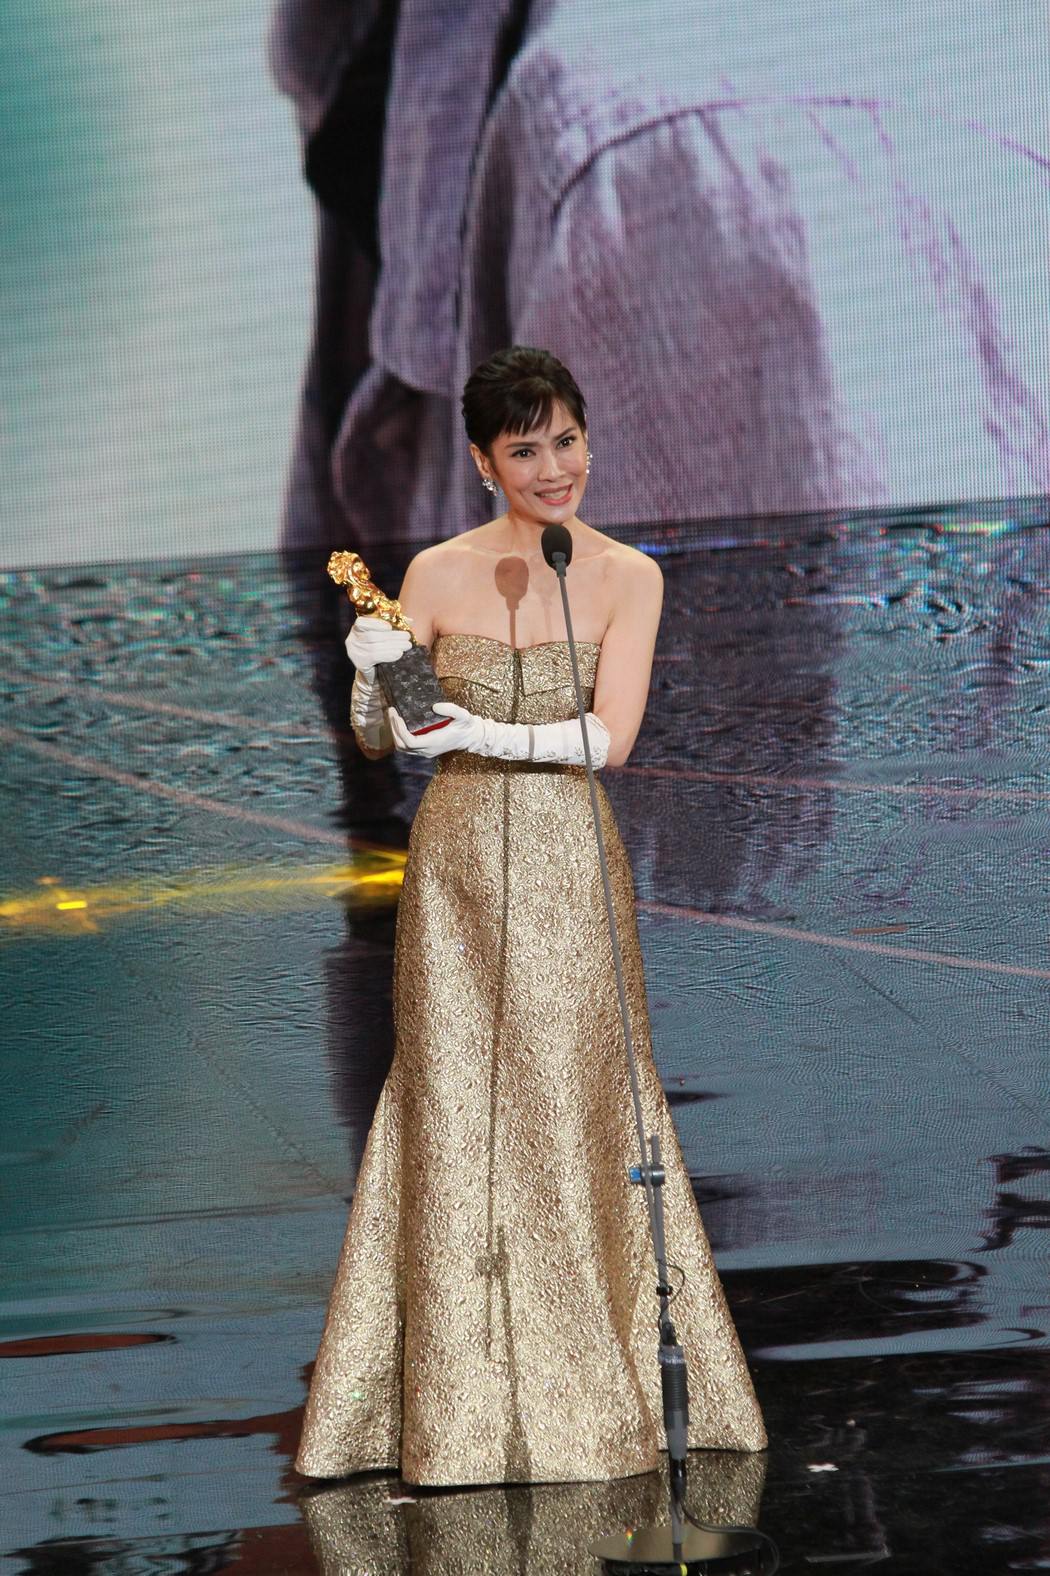 169 最佳女主角 Best Leading Actress陳湘琪CHEN Shiang Chyi 迴光奏鳴曲EXIT